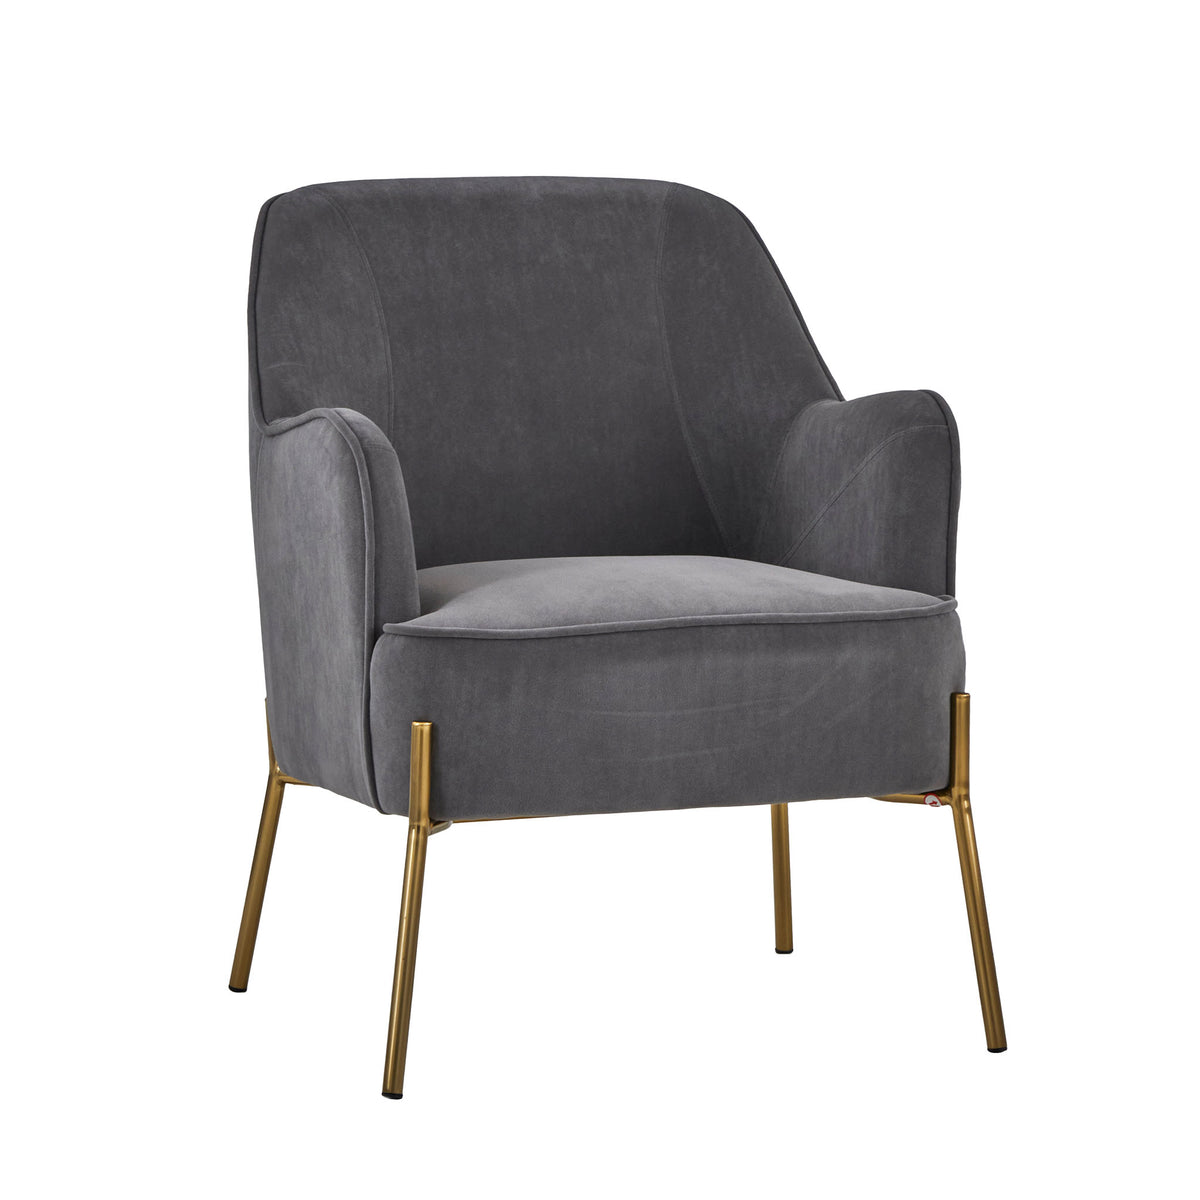 Delphine Steel Grey Velvet Glam Accent Chair from Roseland Furniture